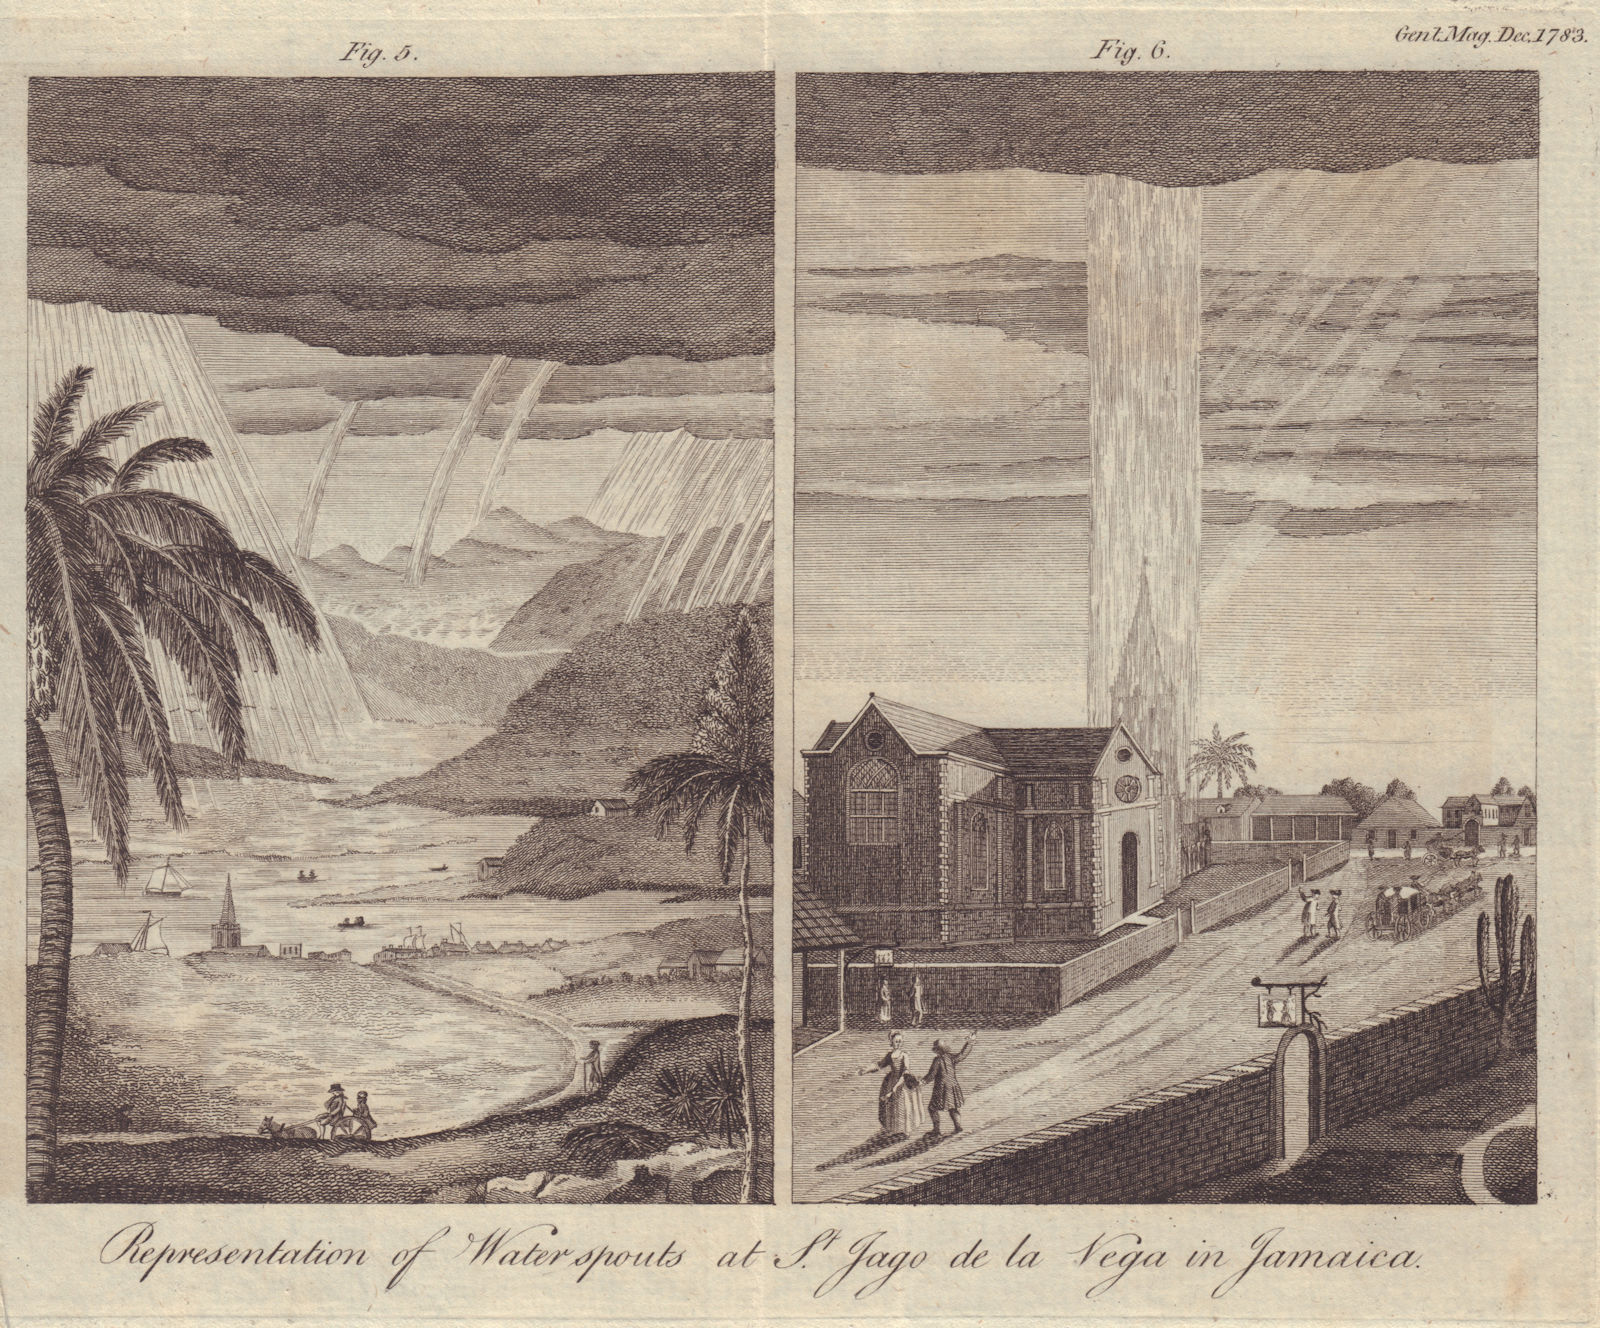 Associate Product Waterspouts at St. Jago de la Vega in Jamaica. Spanish Town. GENTS MAG 1783